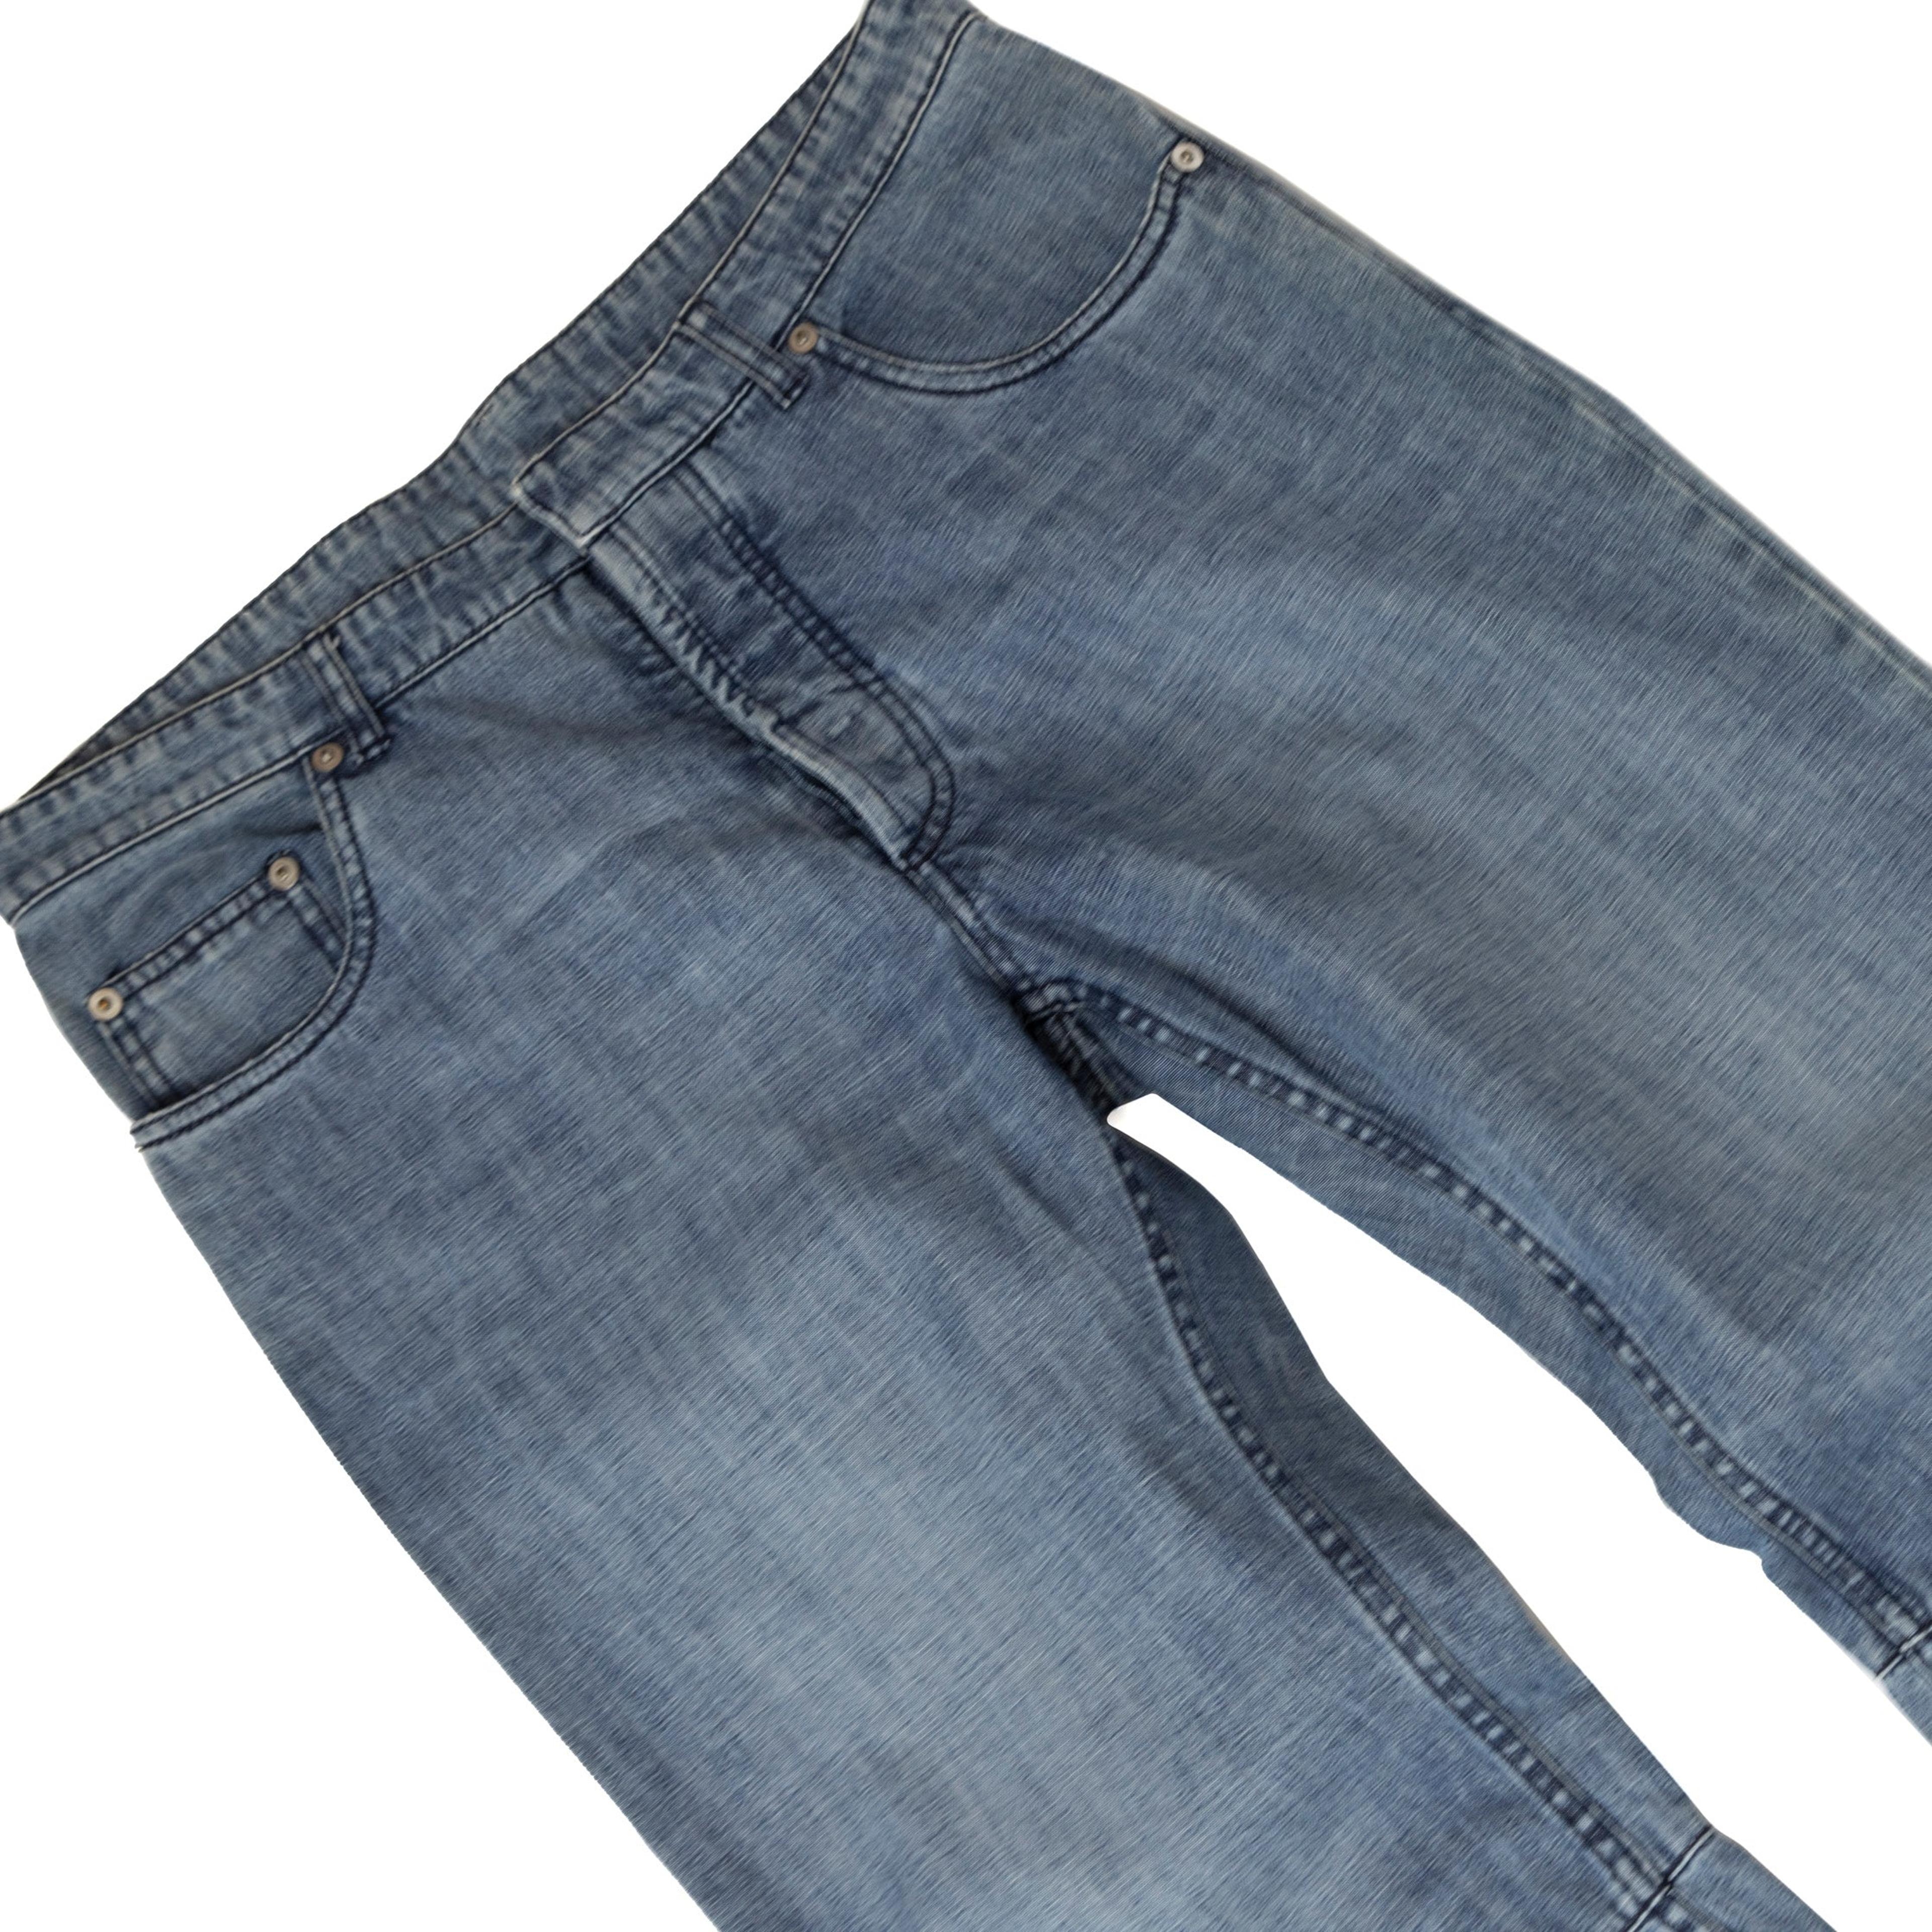 Alternate View 1 of Prada Sport Light Wash Jeans